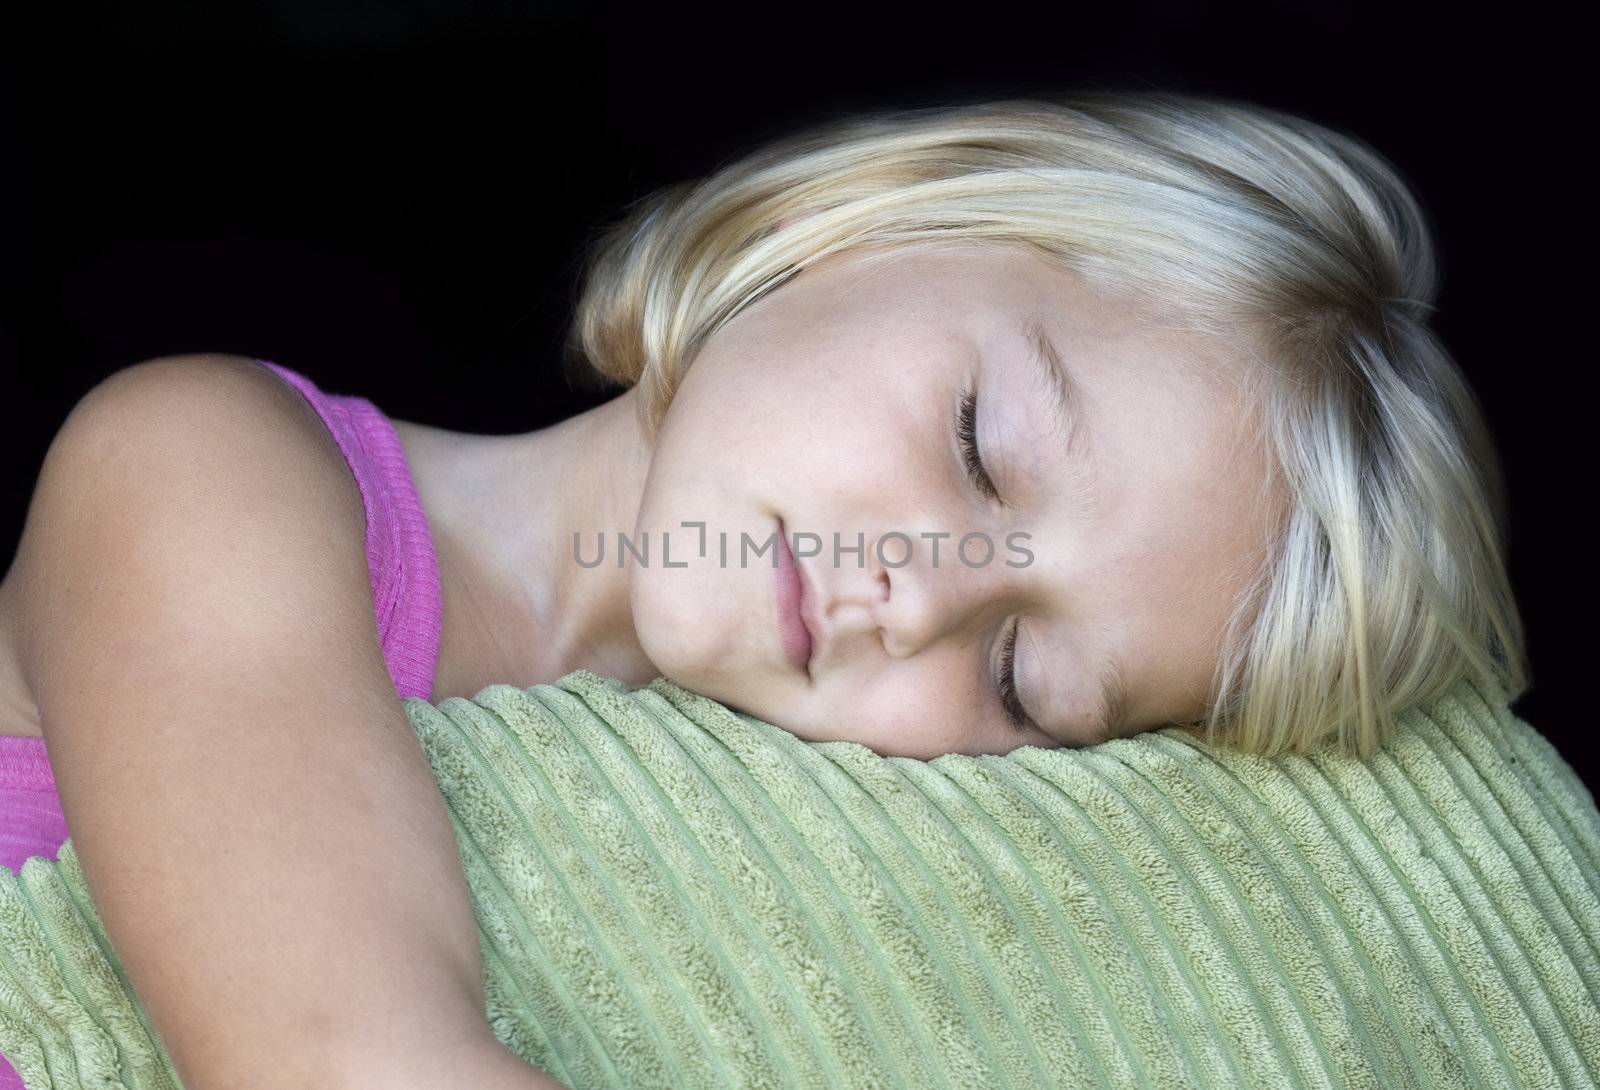 Girl sleeping on a corderoy green pillow. Isolated on black. Peaceful feeling